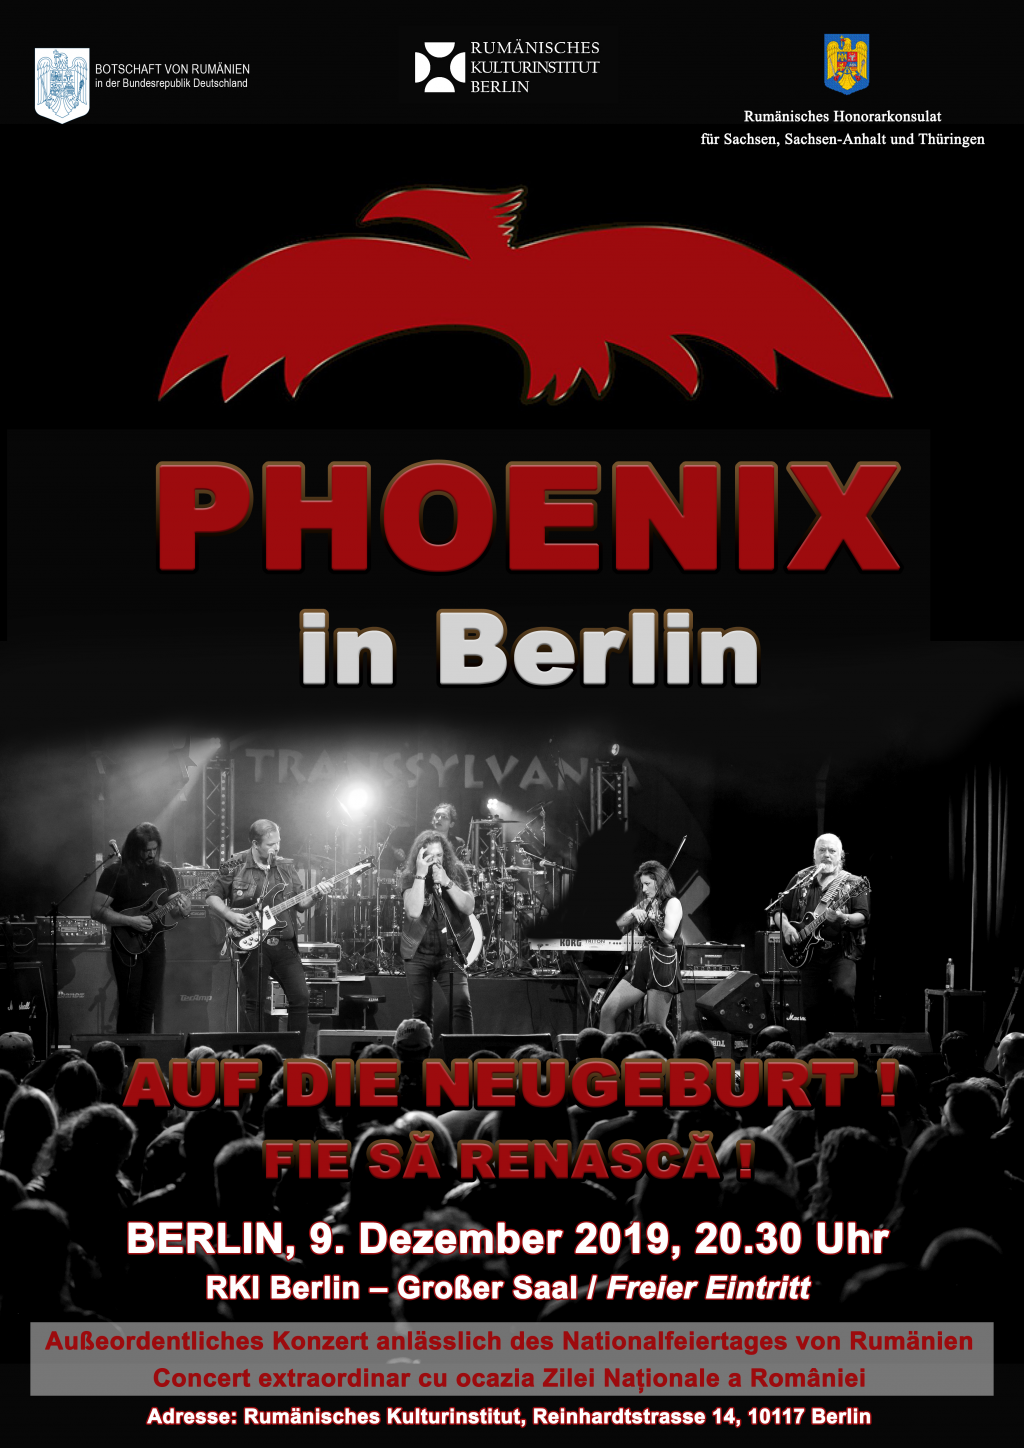 TRANSYLVANIA PHOENIX Konzert am 9.12.2019 in Berlin